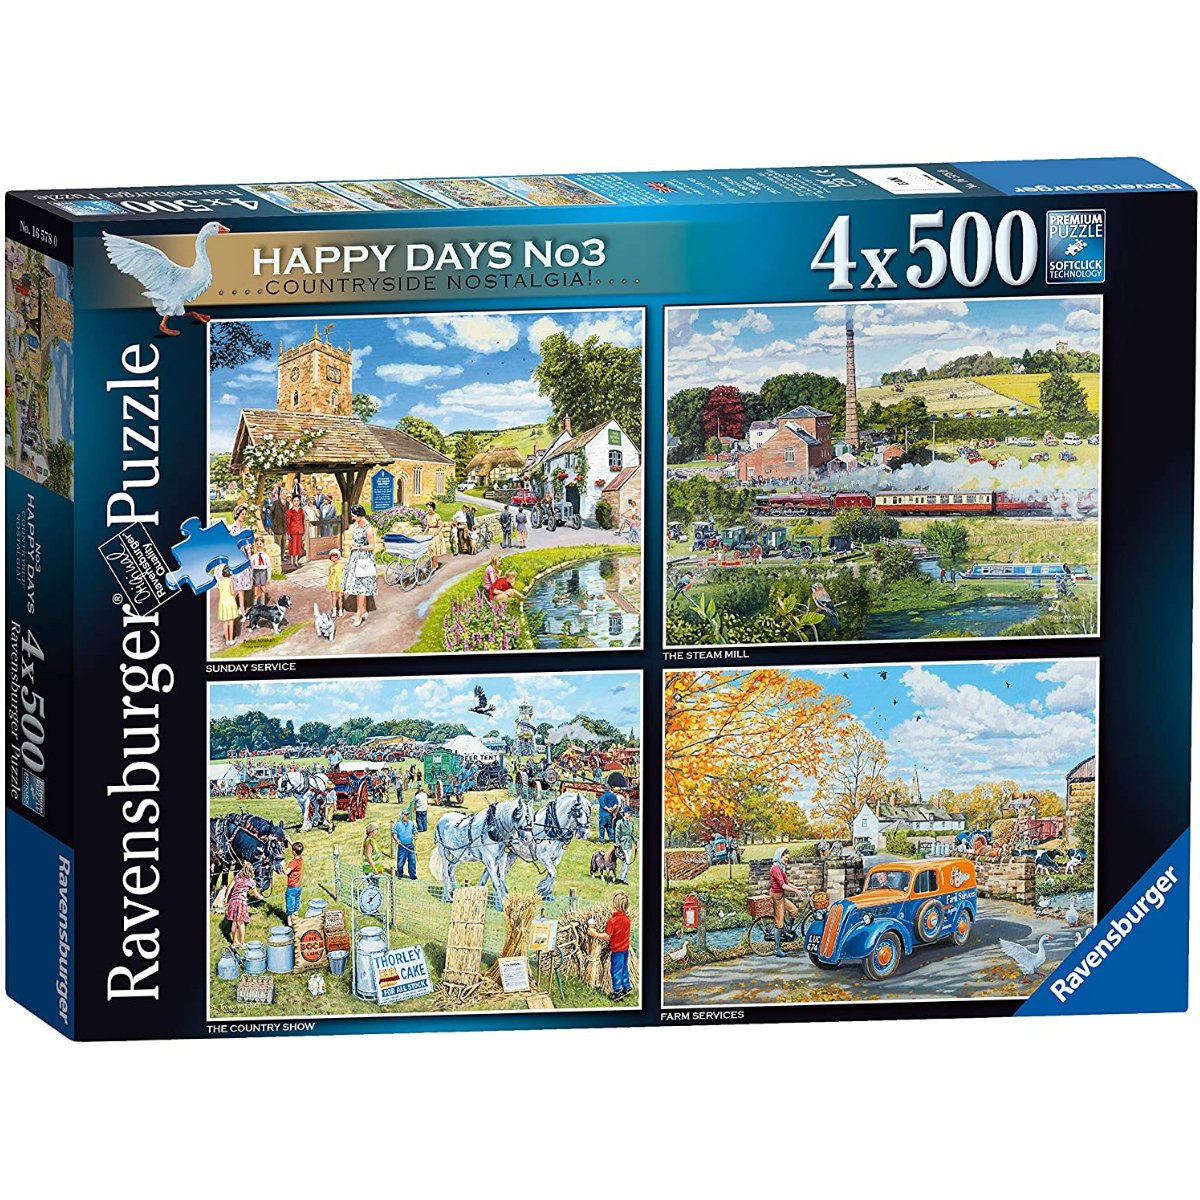 Ravensburger Happy Days No.3, Countryside Nostalgia - 4x 500 Piece Jigsaw Puzzle - Phillips Hobbies